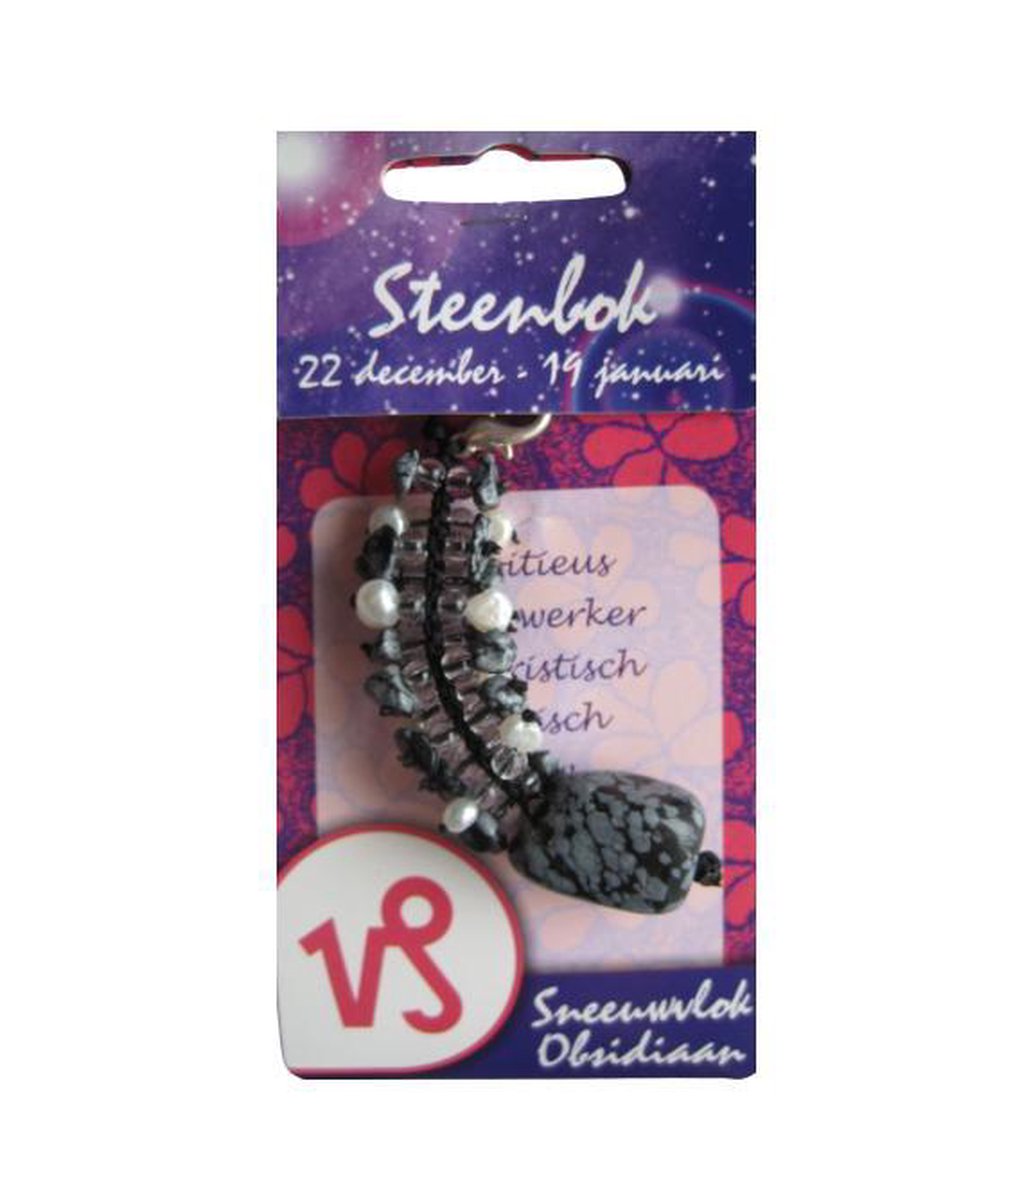 Geschenksteen Sneeuwvlok Obsidiaan | Sterrenbeeld: Steenbok, 22 december - 19 januari